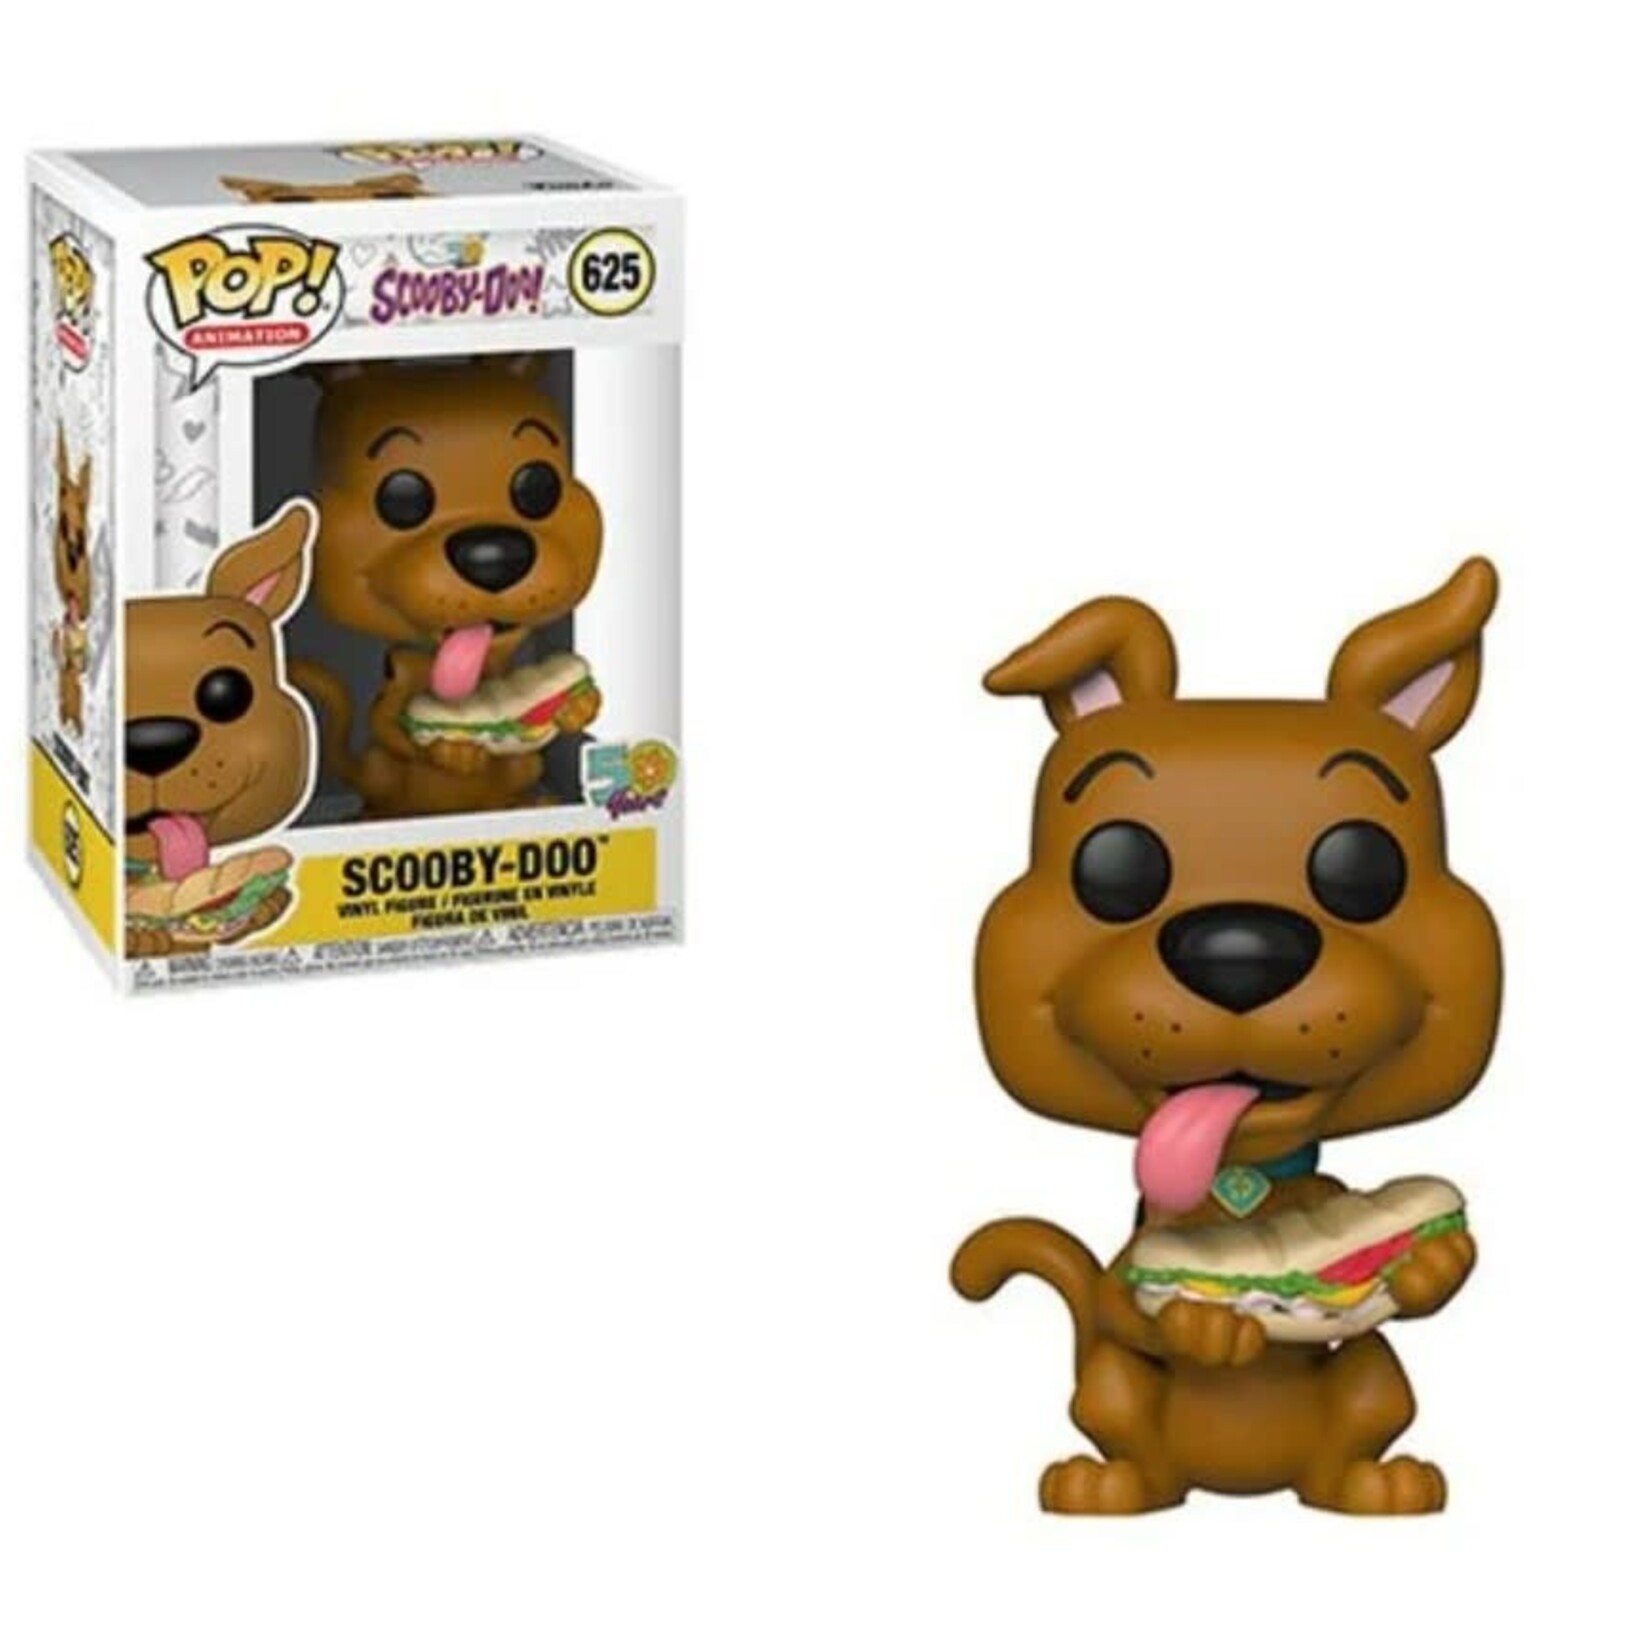 Scooby-Doo Scooby-Doo with Sandwich Funko Pop!